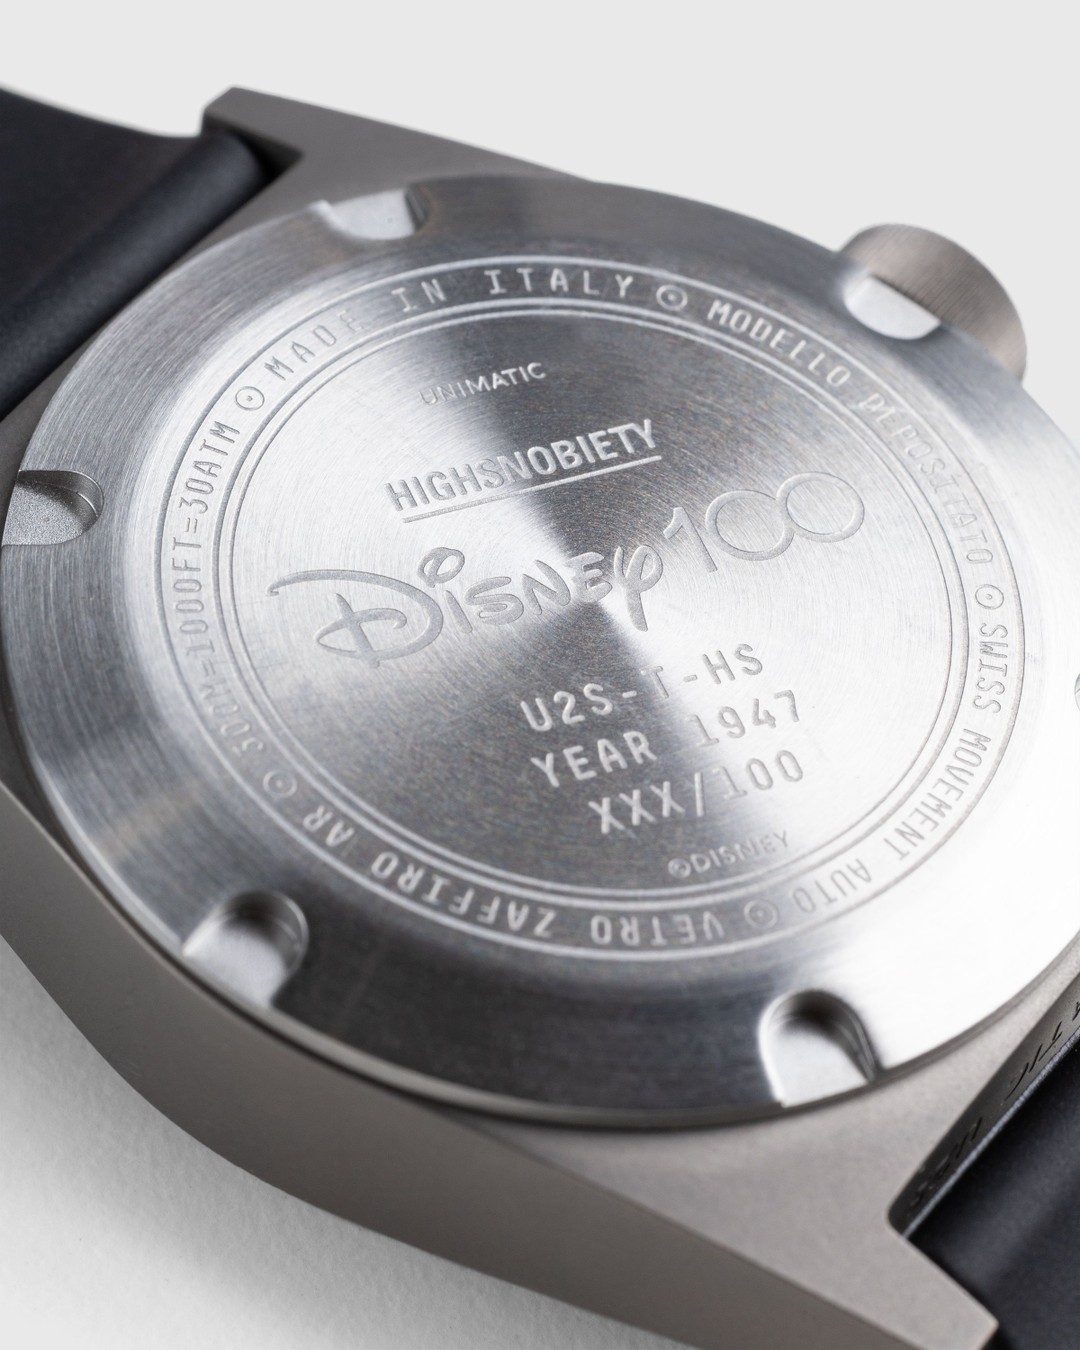 Disney x Unimatic x Highsnobiety – Modello Due U2S-T-HS - Watches - Silver - Image 3